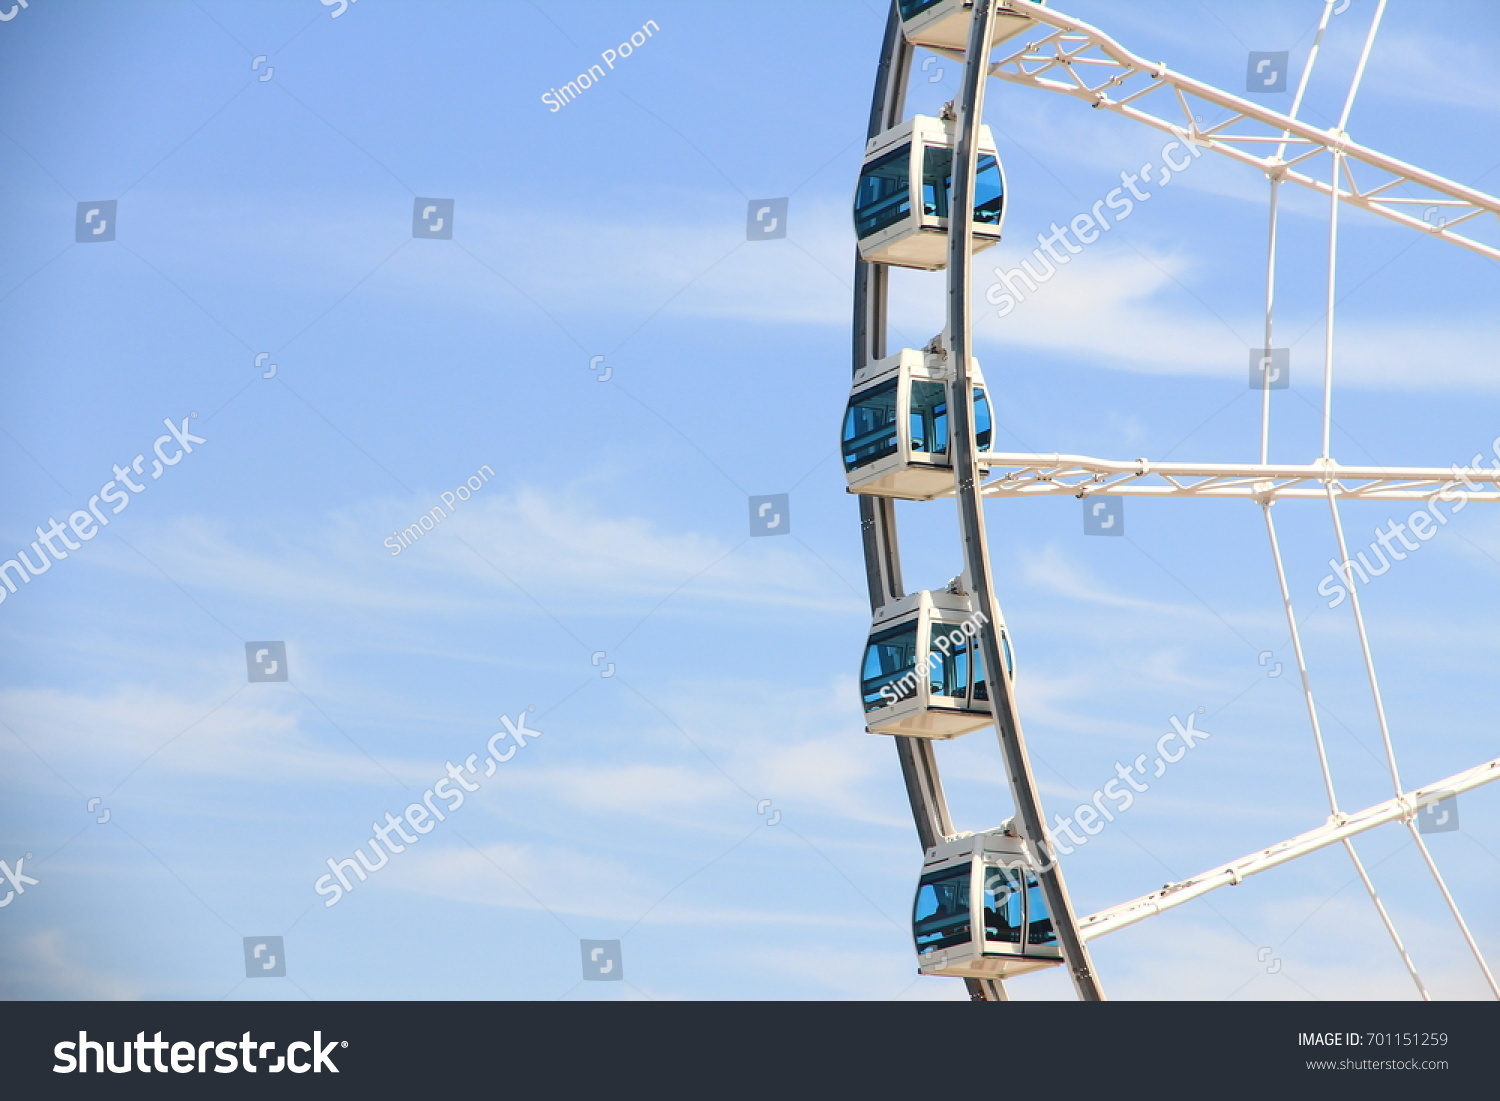 Ferris Wheel in Hong Kong #701151259